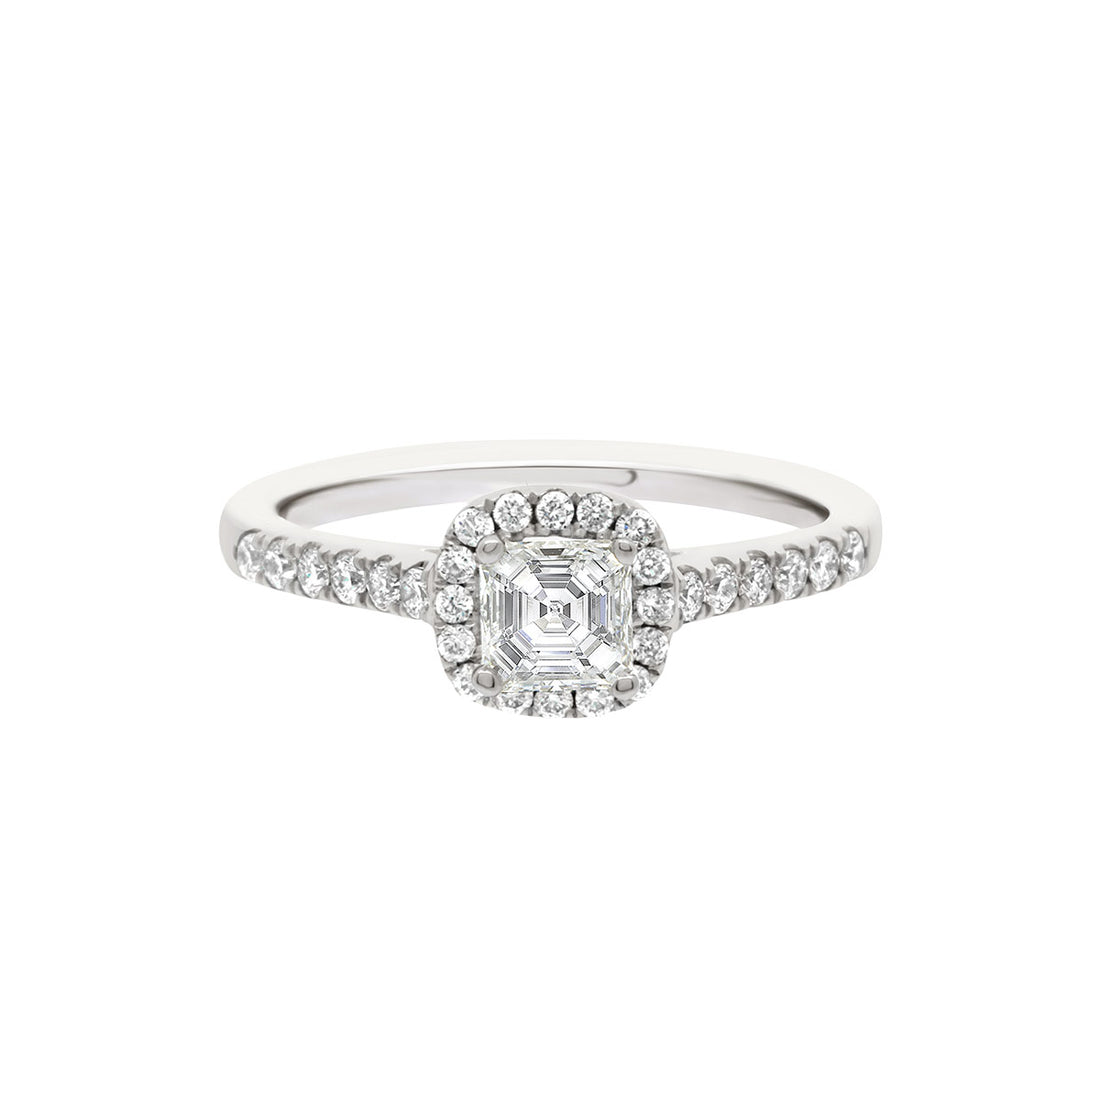 Asscher Halo Diamond Ring in white gold